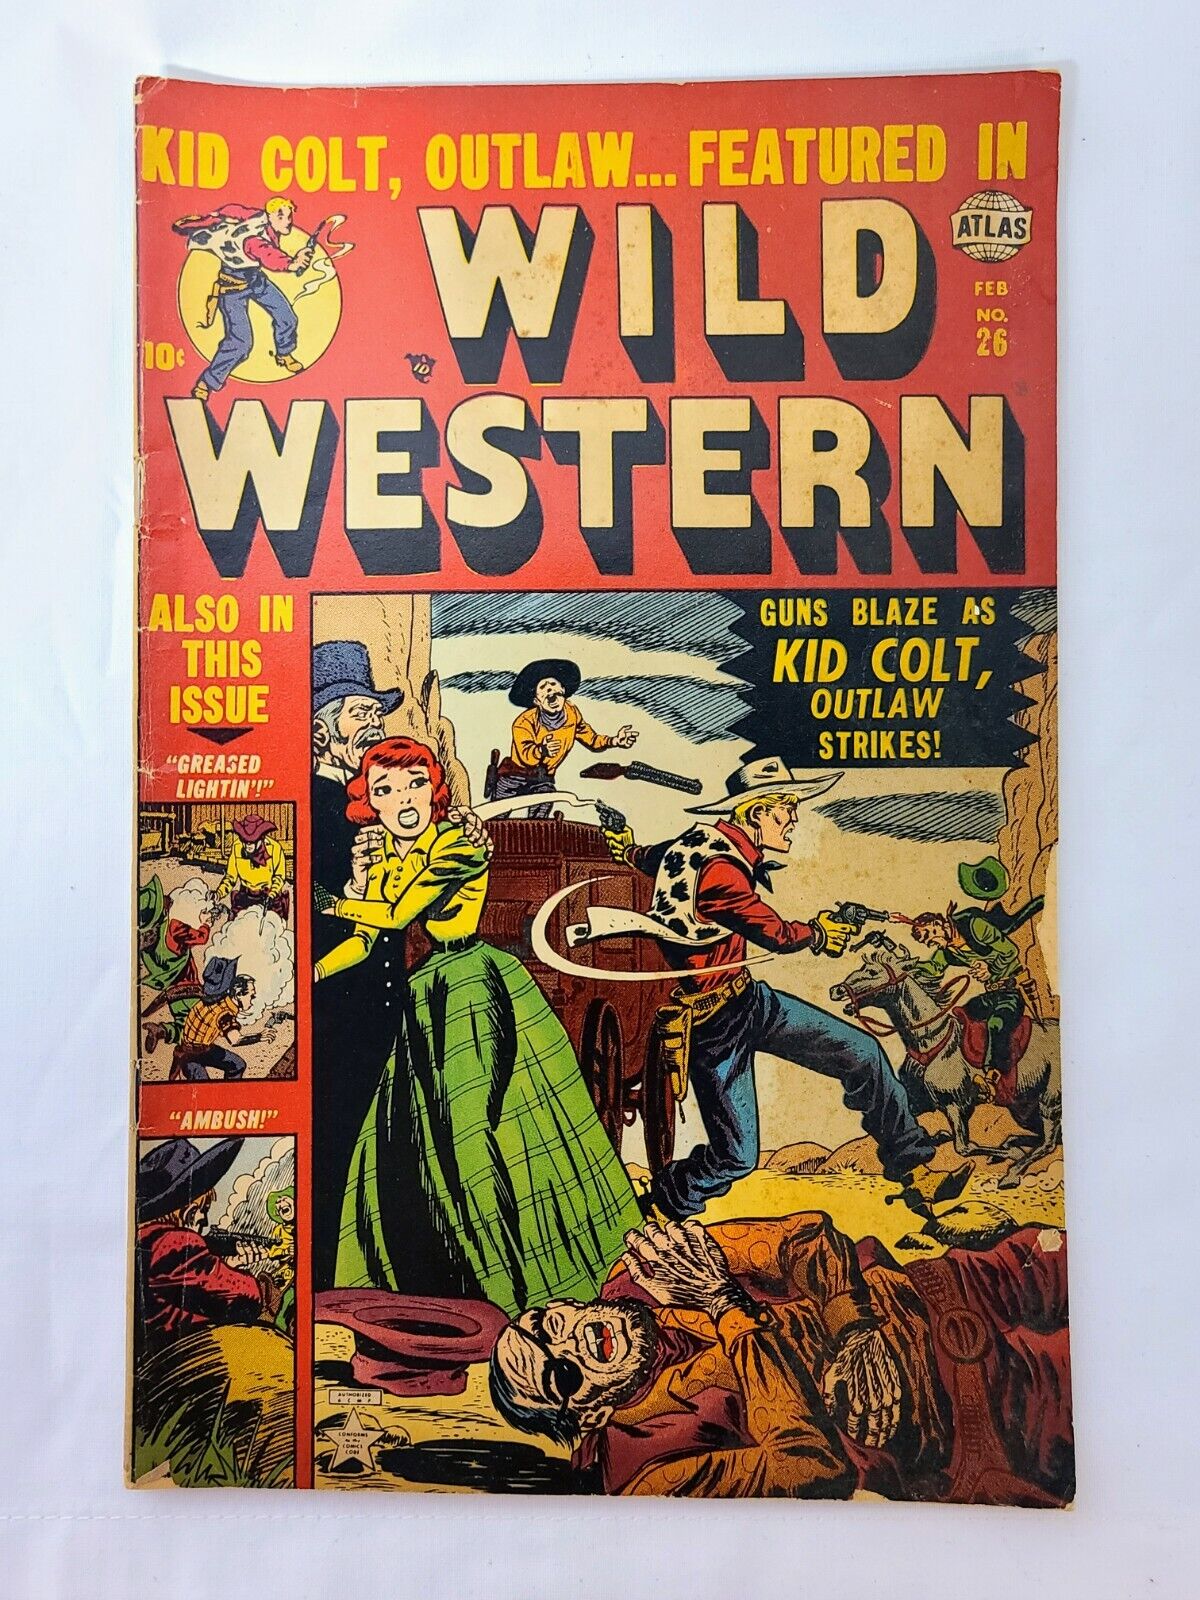 Wild Western #26 Feb 1953 - EARLY STAN LEE - Kid Colt Outlaw - Western Comic 